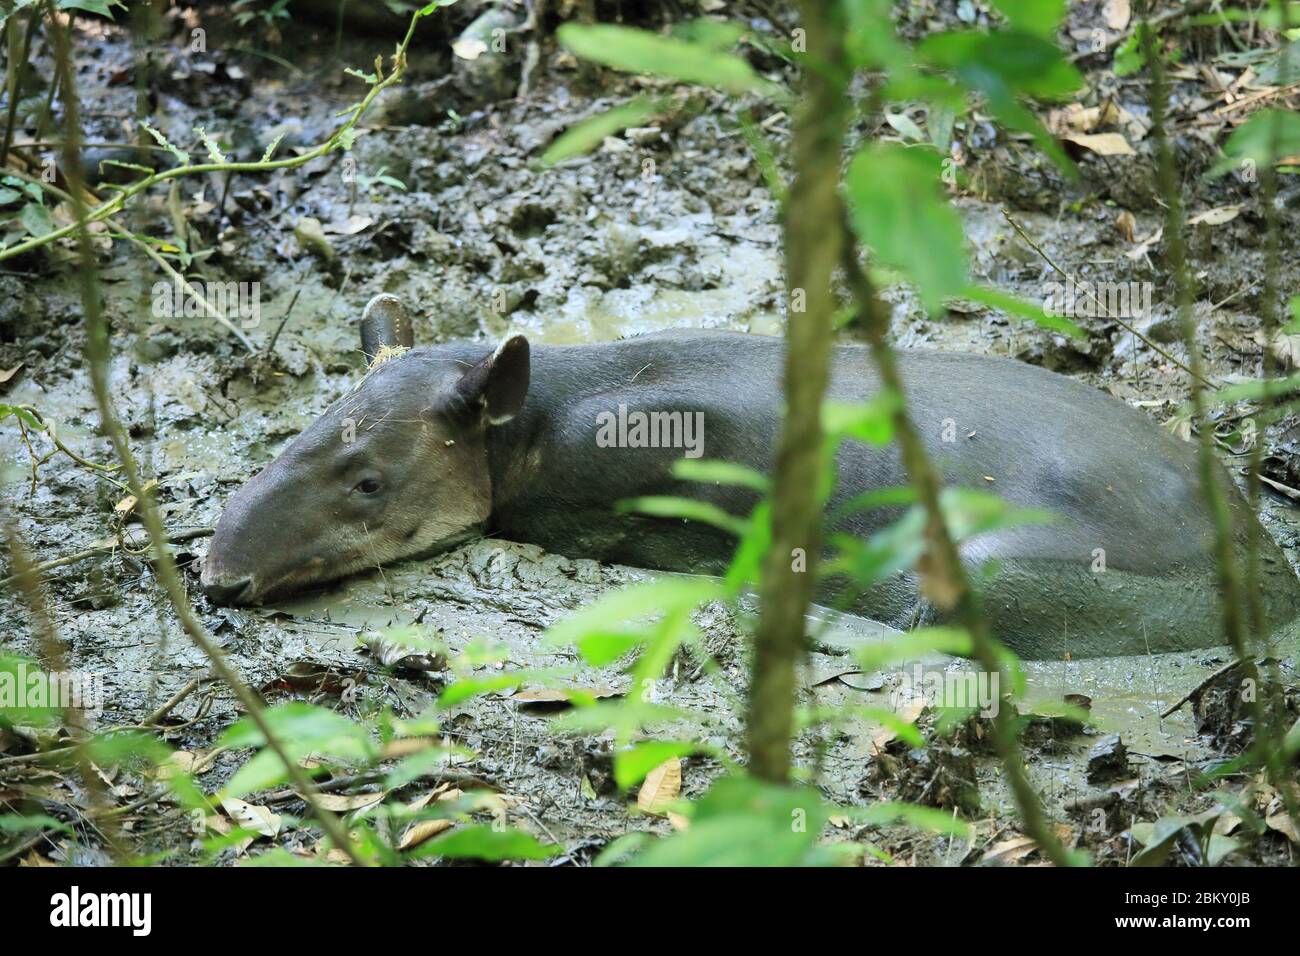 Tapir de Baird (Tapirus bairdii) descansando en el barro de un arroyo de selva semi-seca. Estación de Guardaparques Sirena, Parque Nacional Corcovado, Osa, Costa Rica Foto de stock